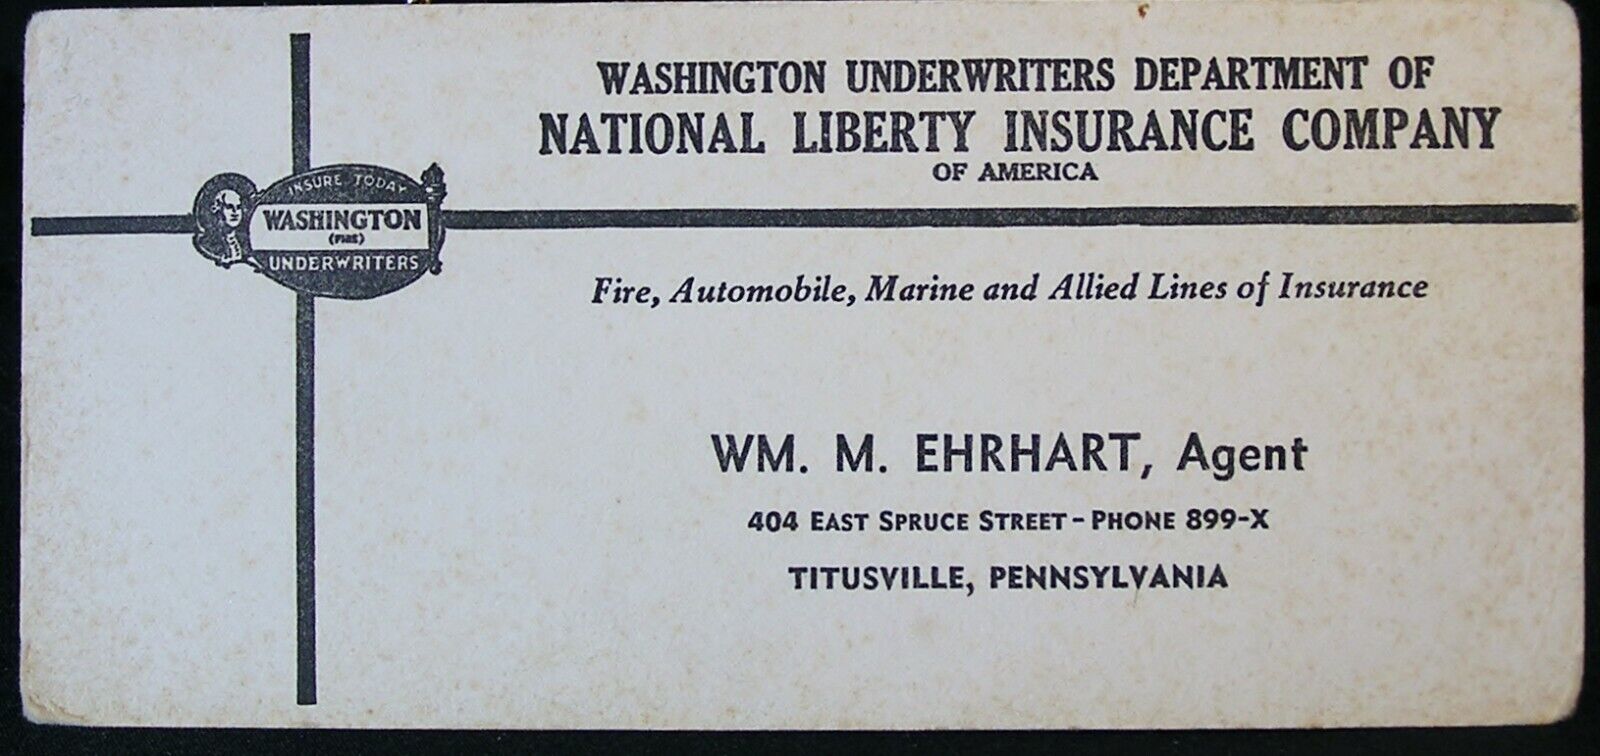 Vtg postcard Washington Underwriters Dept of National Liberty Insurance Co 